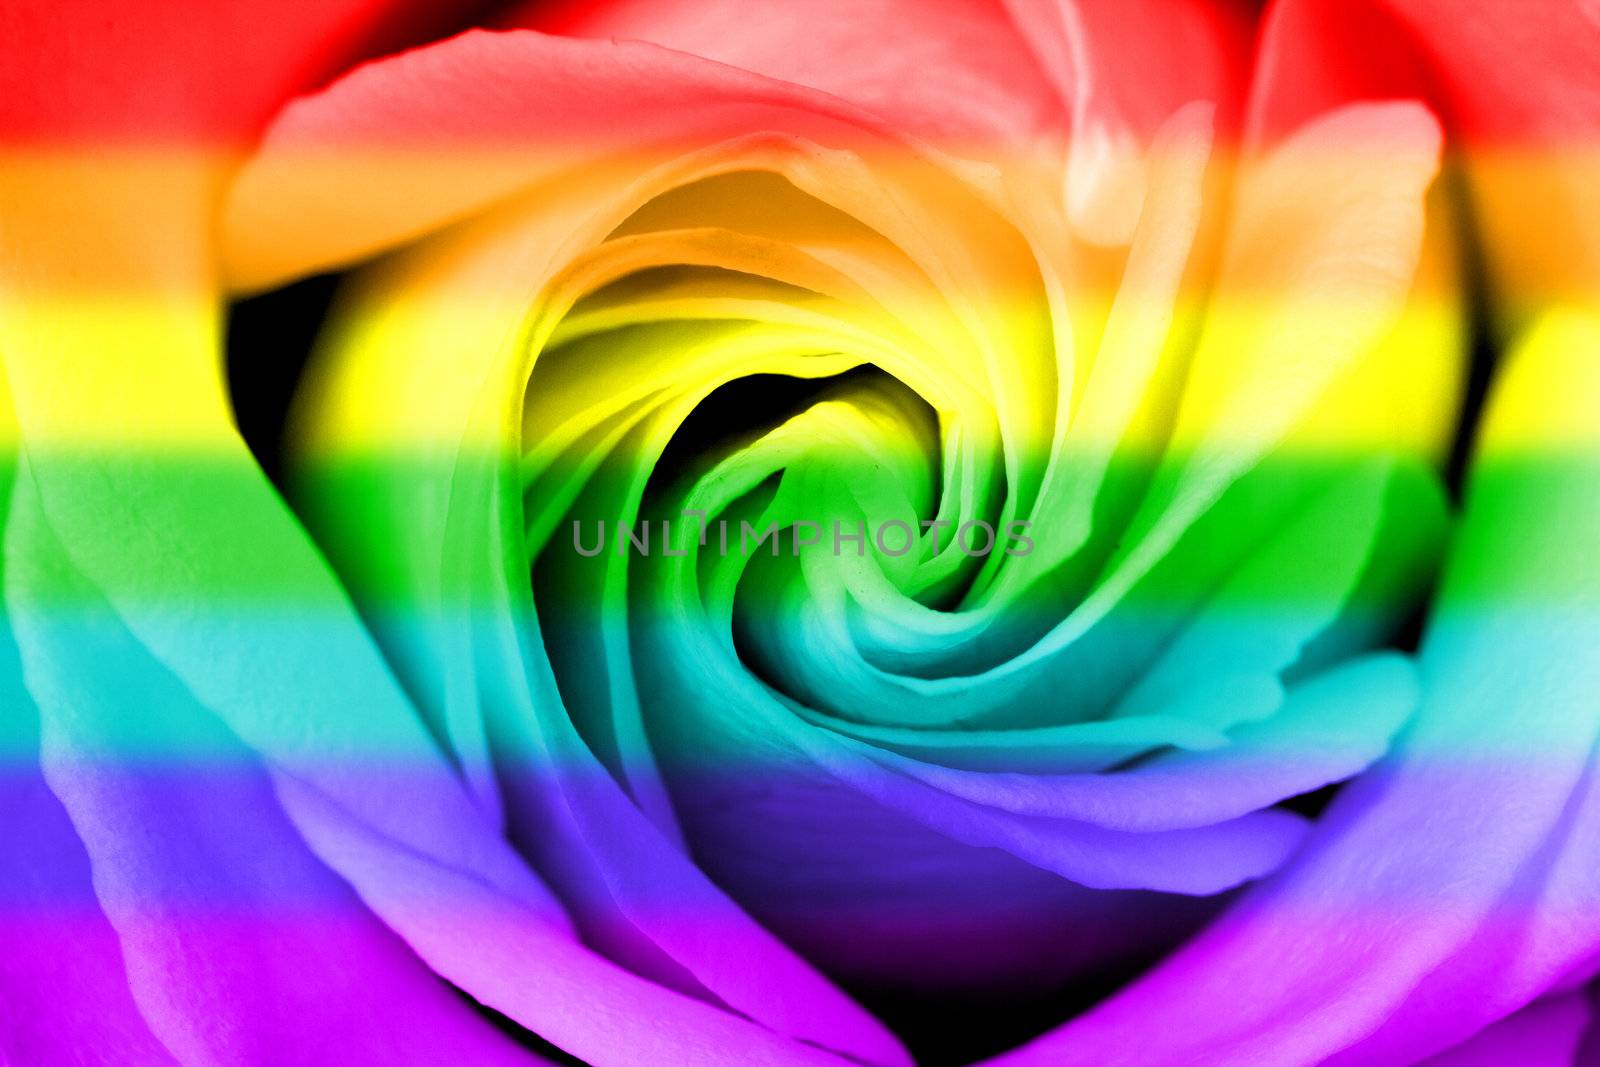 Rainbow flag rose by michaklootwijk